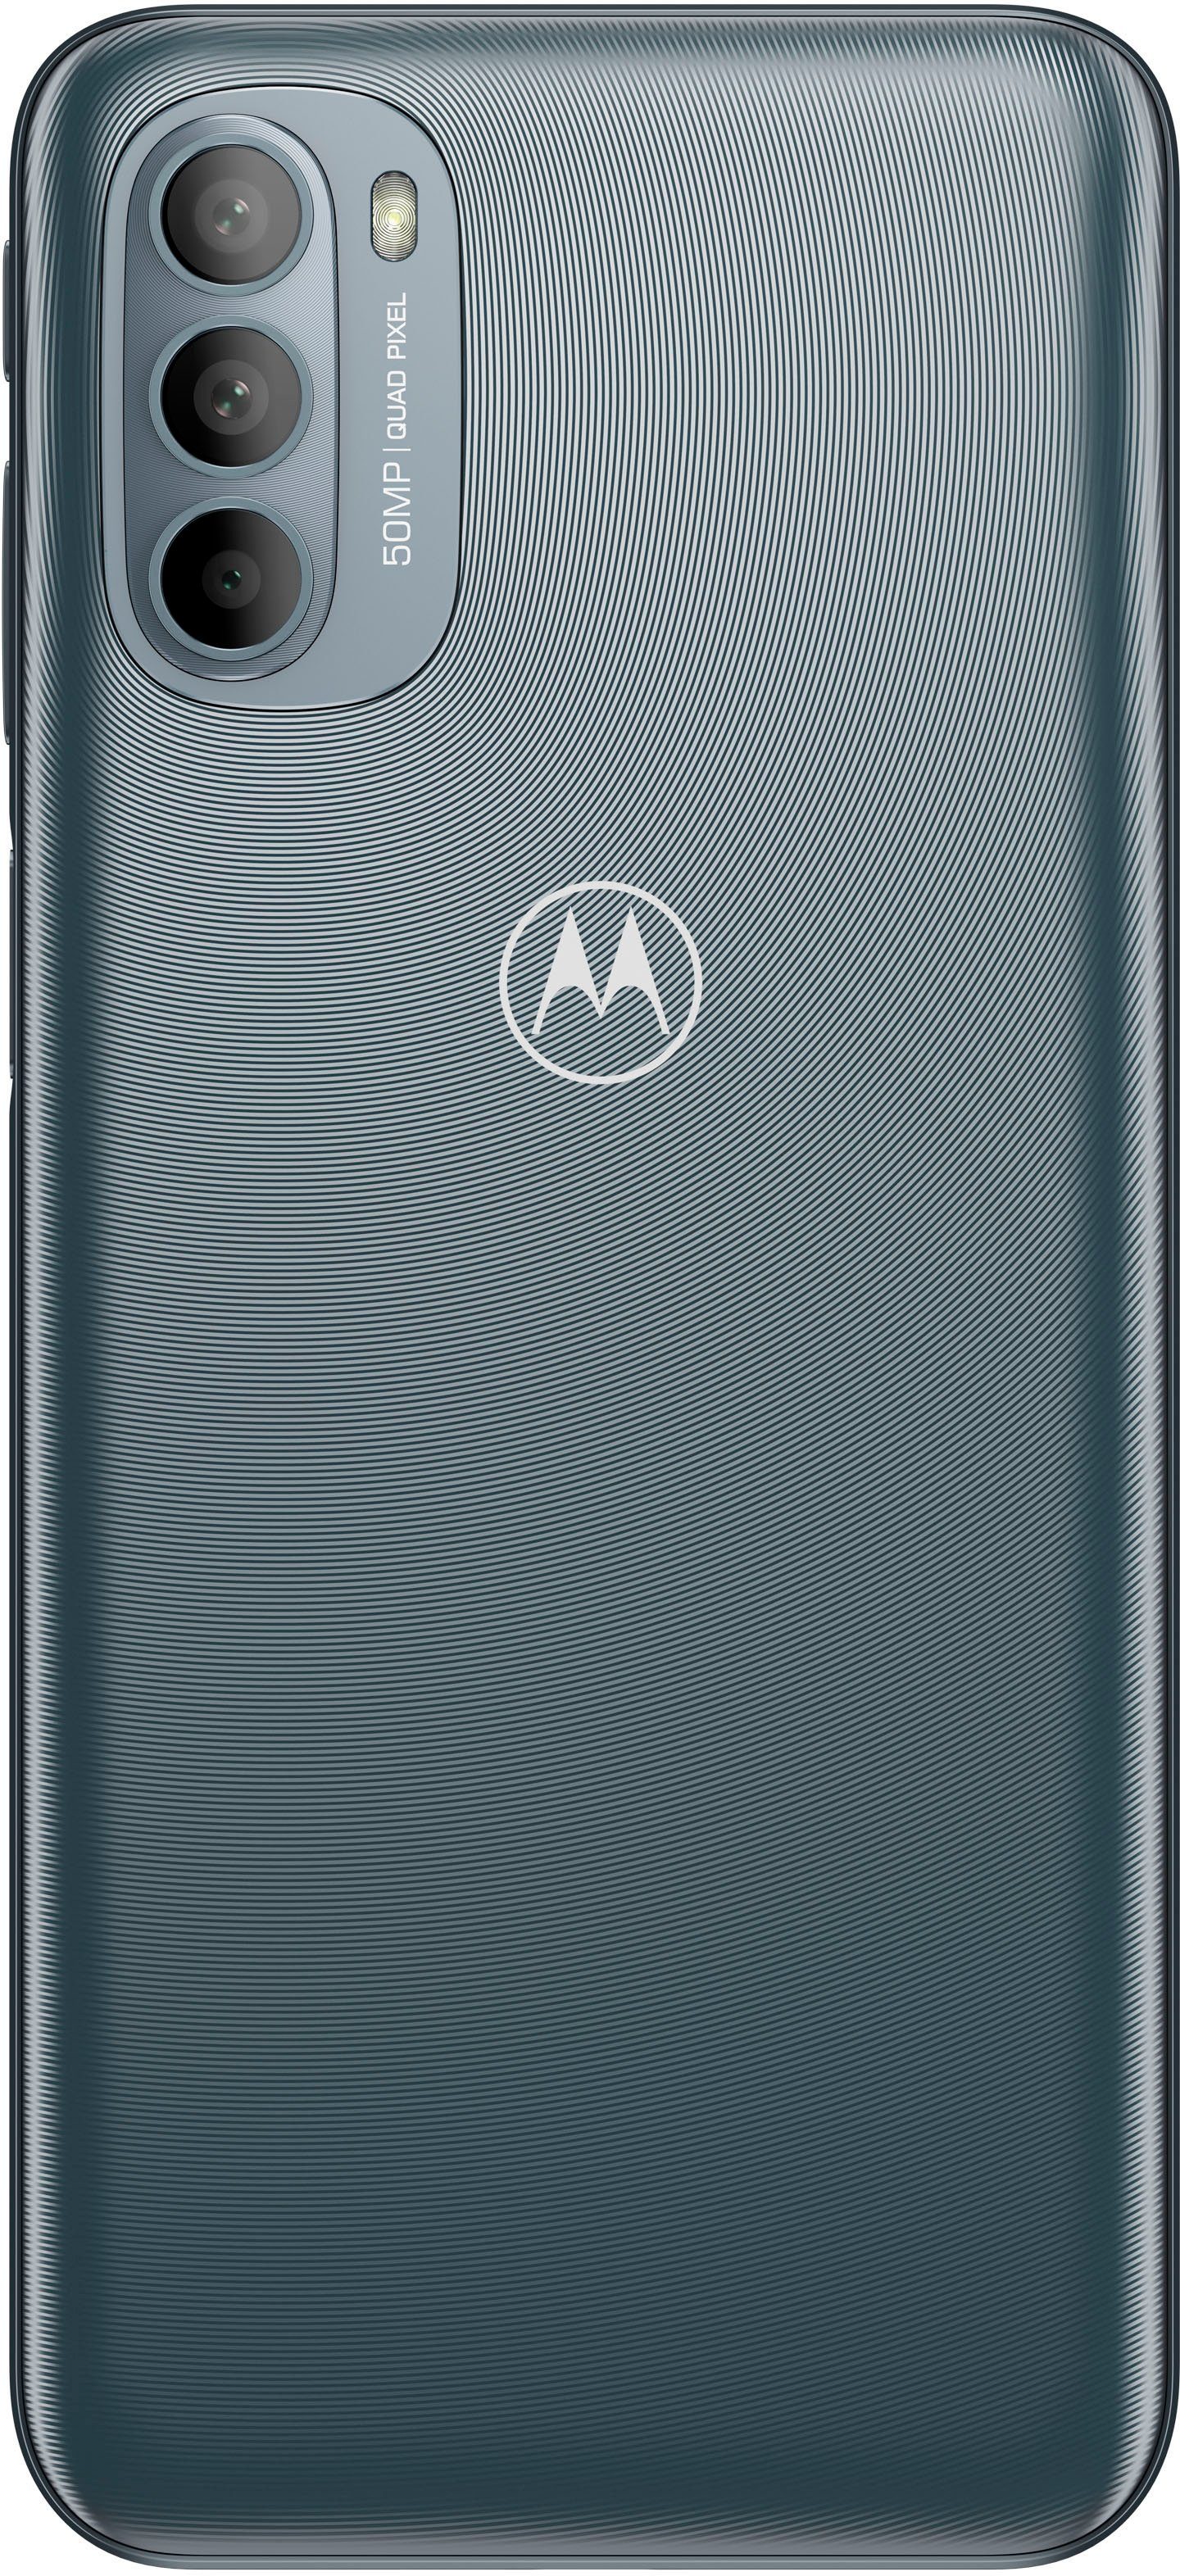 Motorola moto g31 Smartphone GB 50 64 Kamera) cm/6,4 (16,3 Zoll, Speicherplatz, mineral grey MP